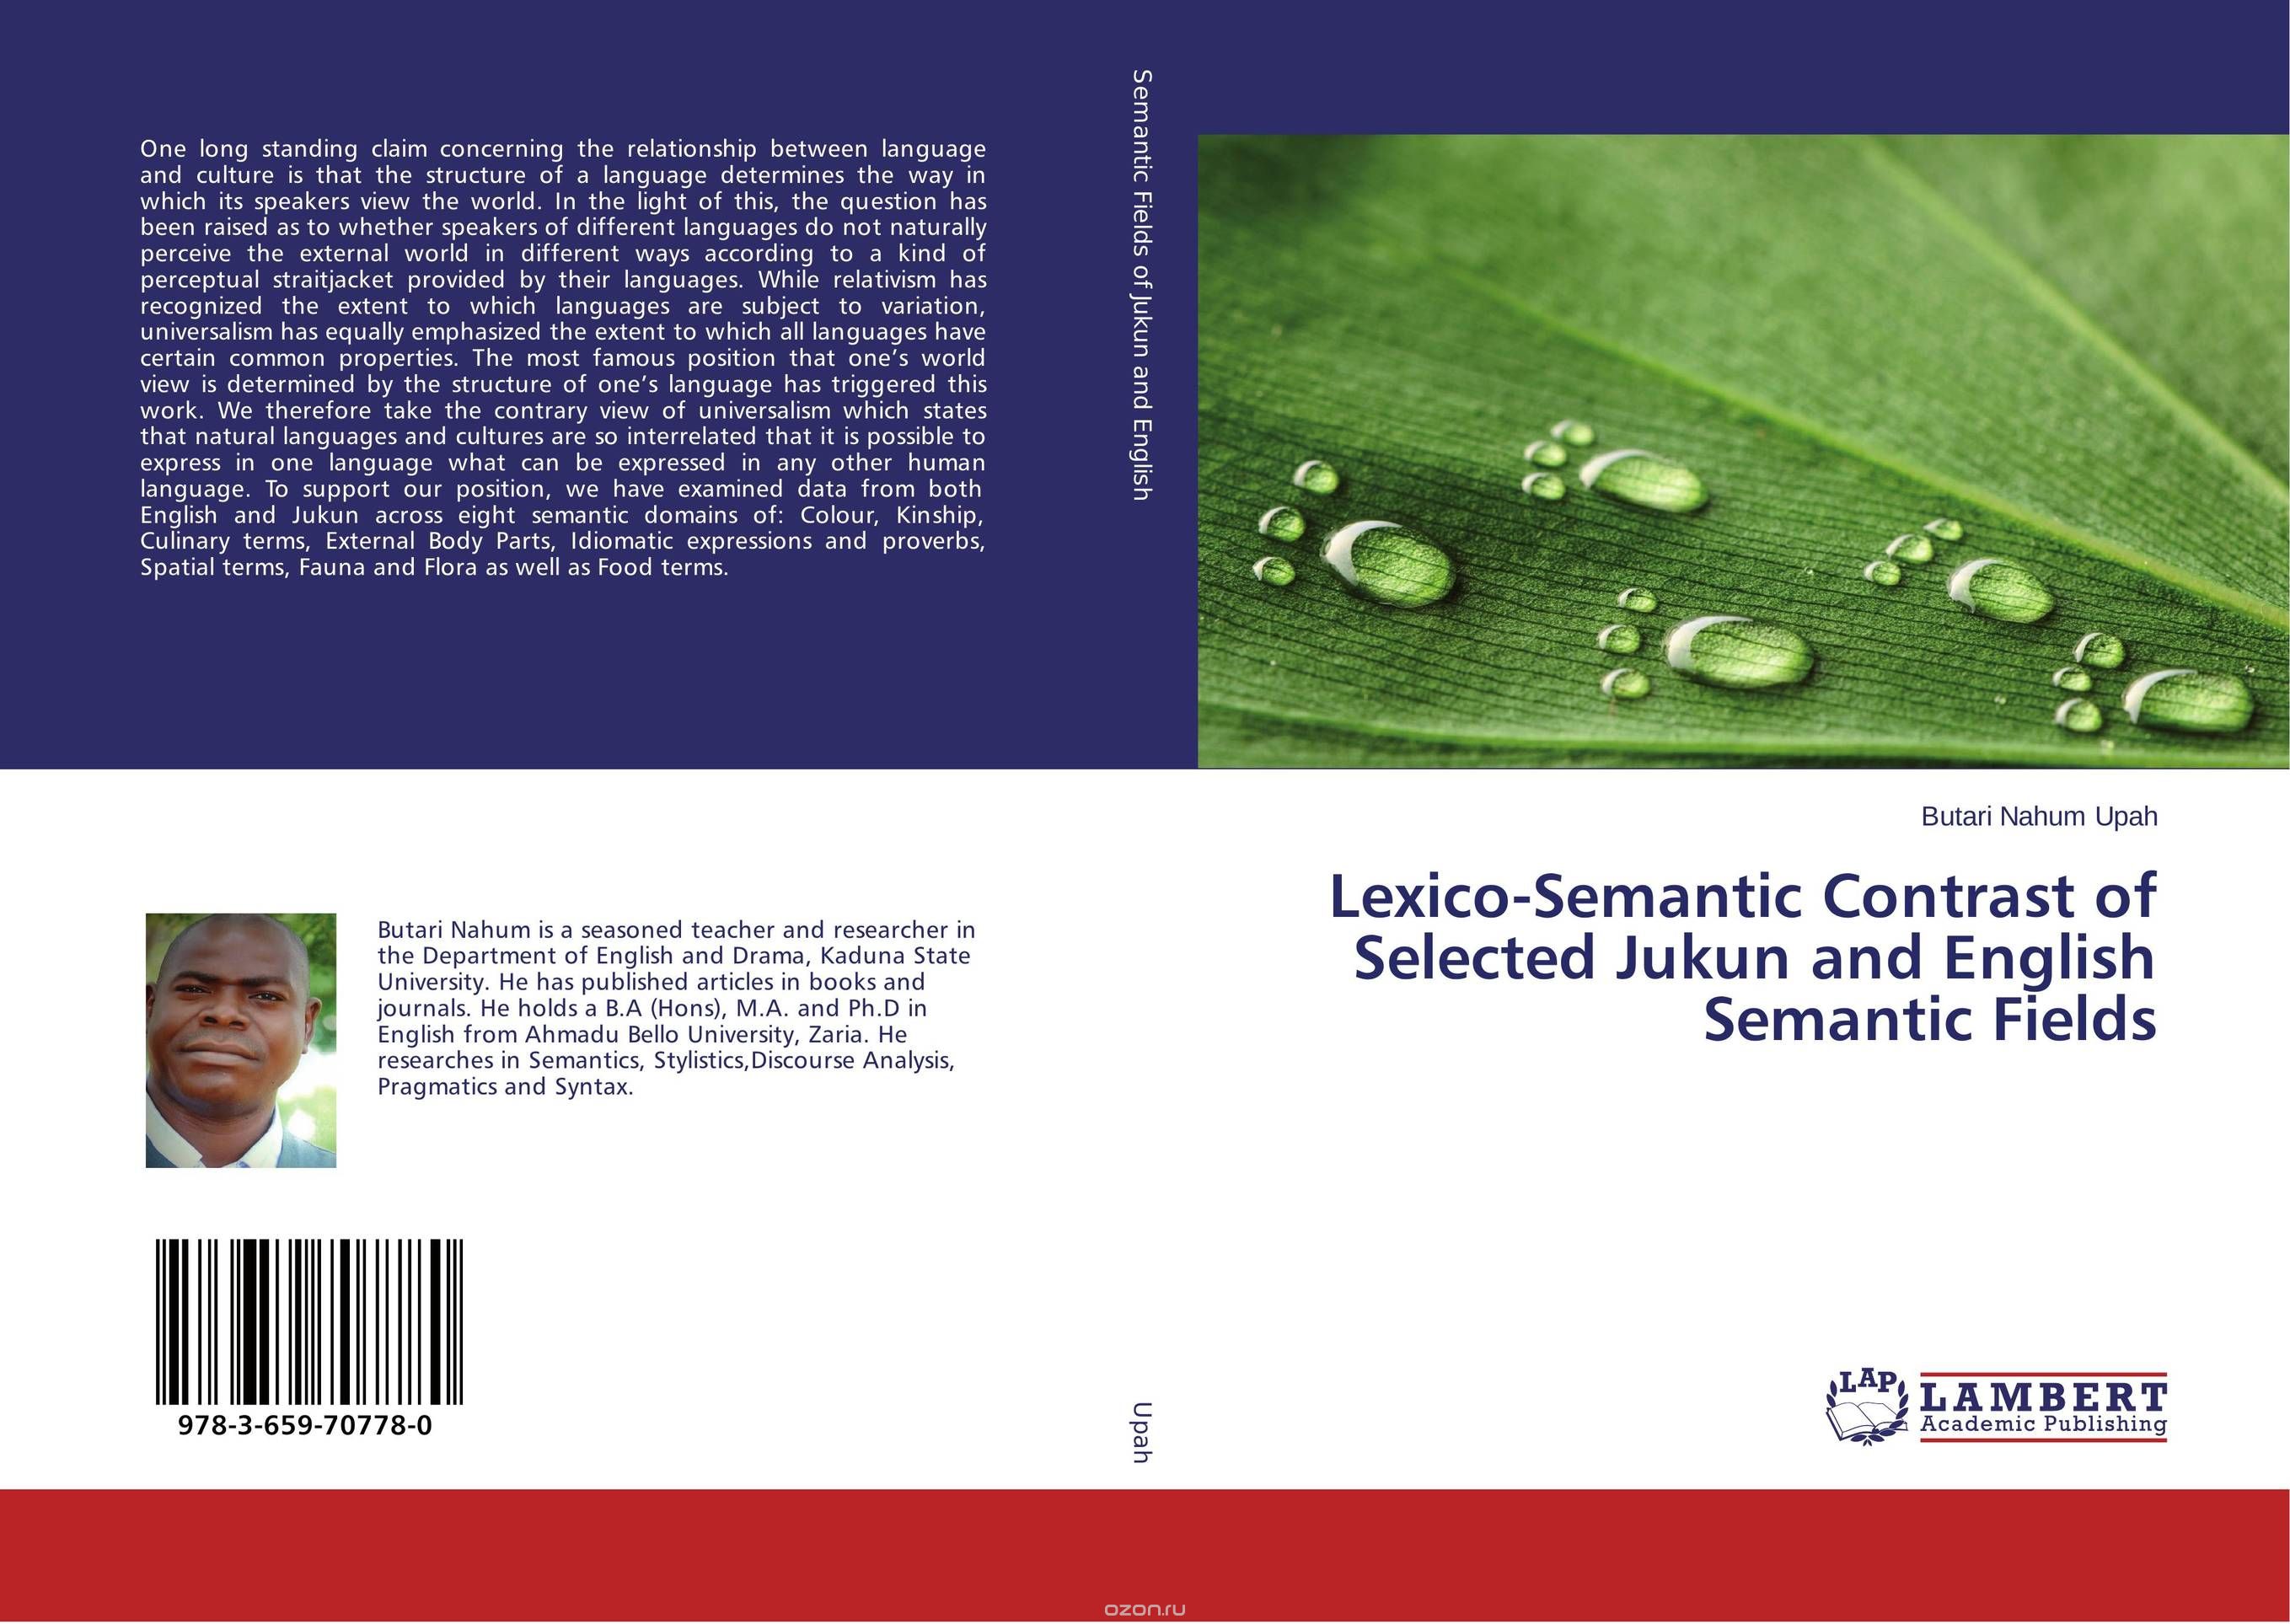 Скачать книгу "Lexico-Semantic Contrast of Selected Jukun and English Semantic Fields"